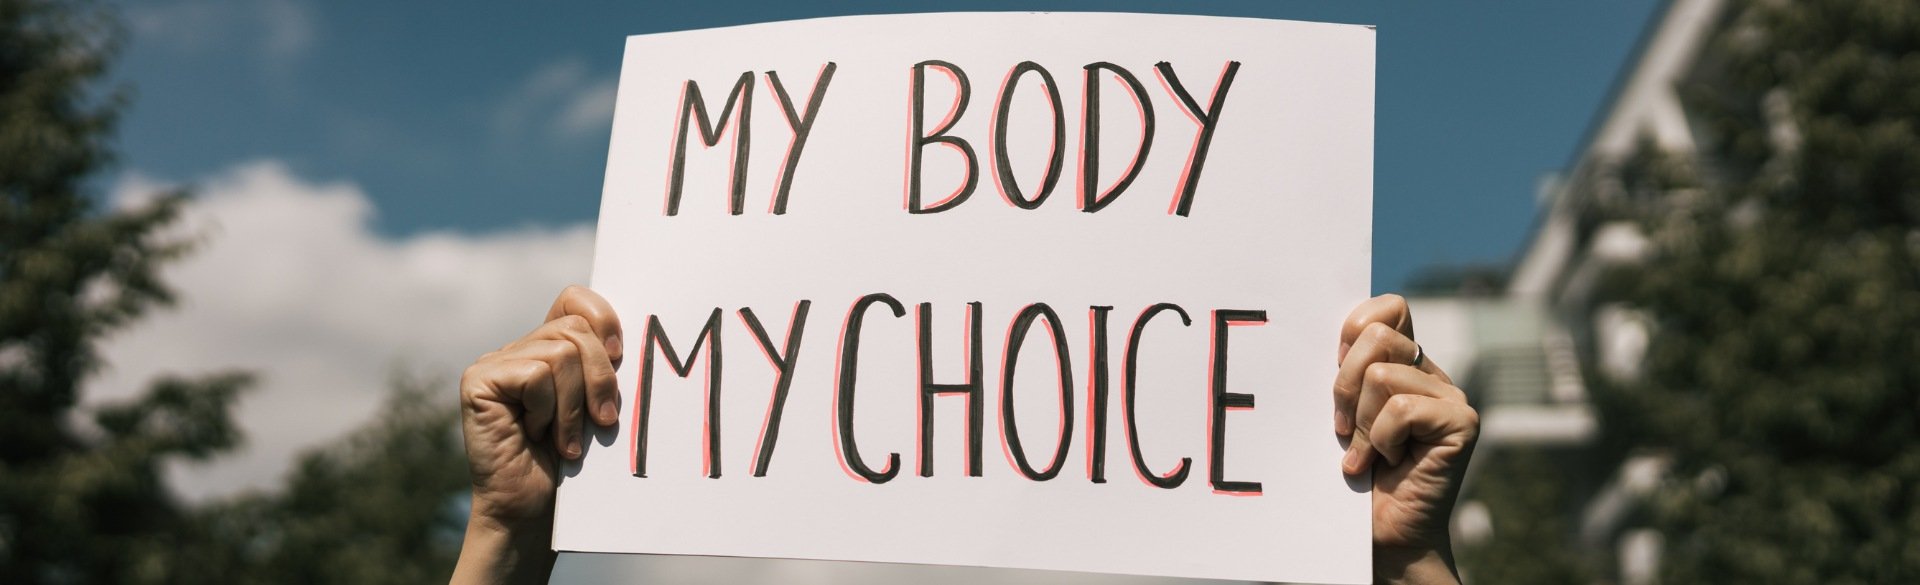 Sign reading "my body my choice"